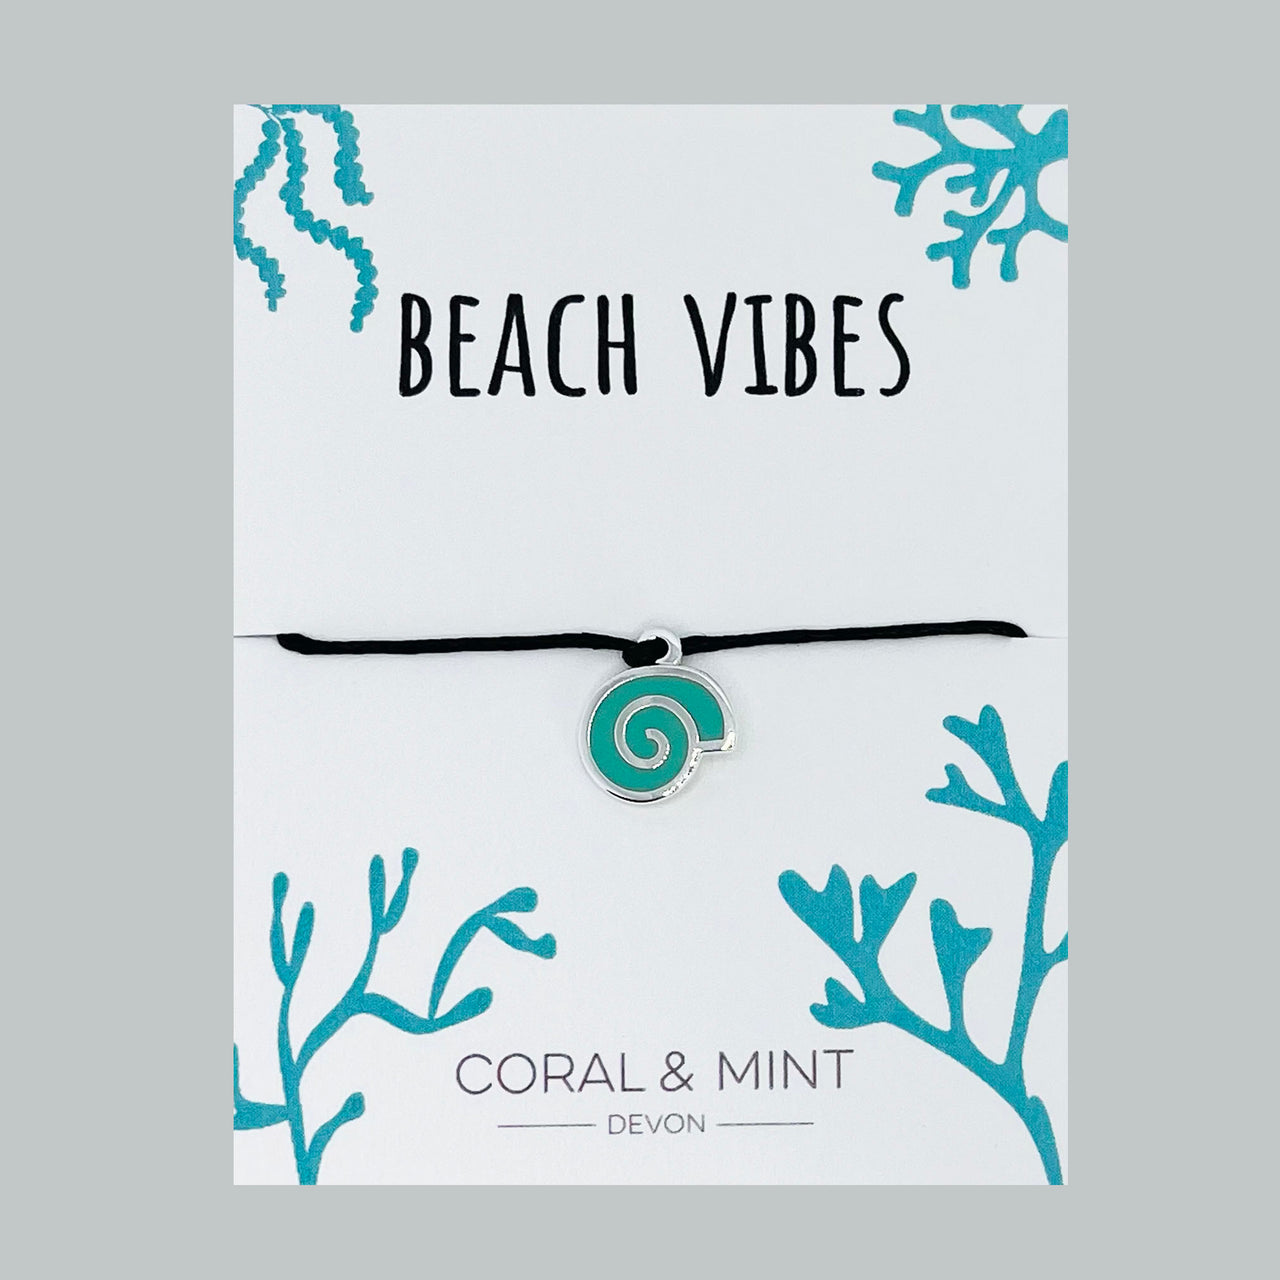 Beach Vibes - Teal shell